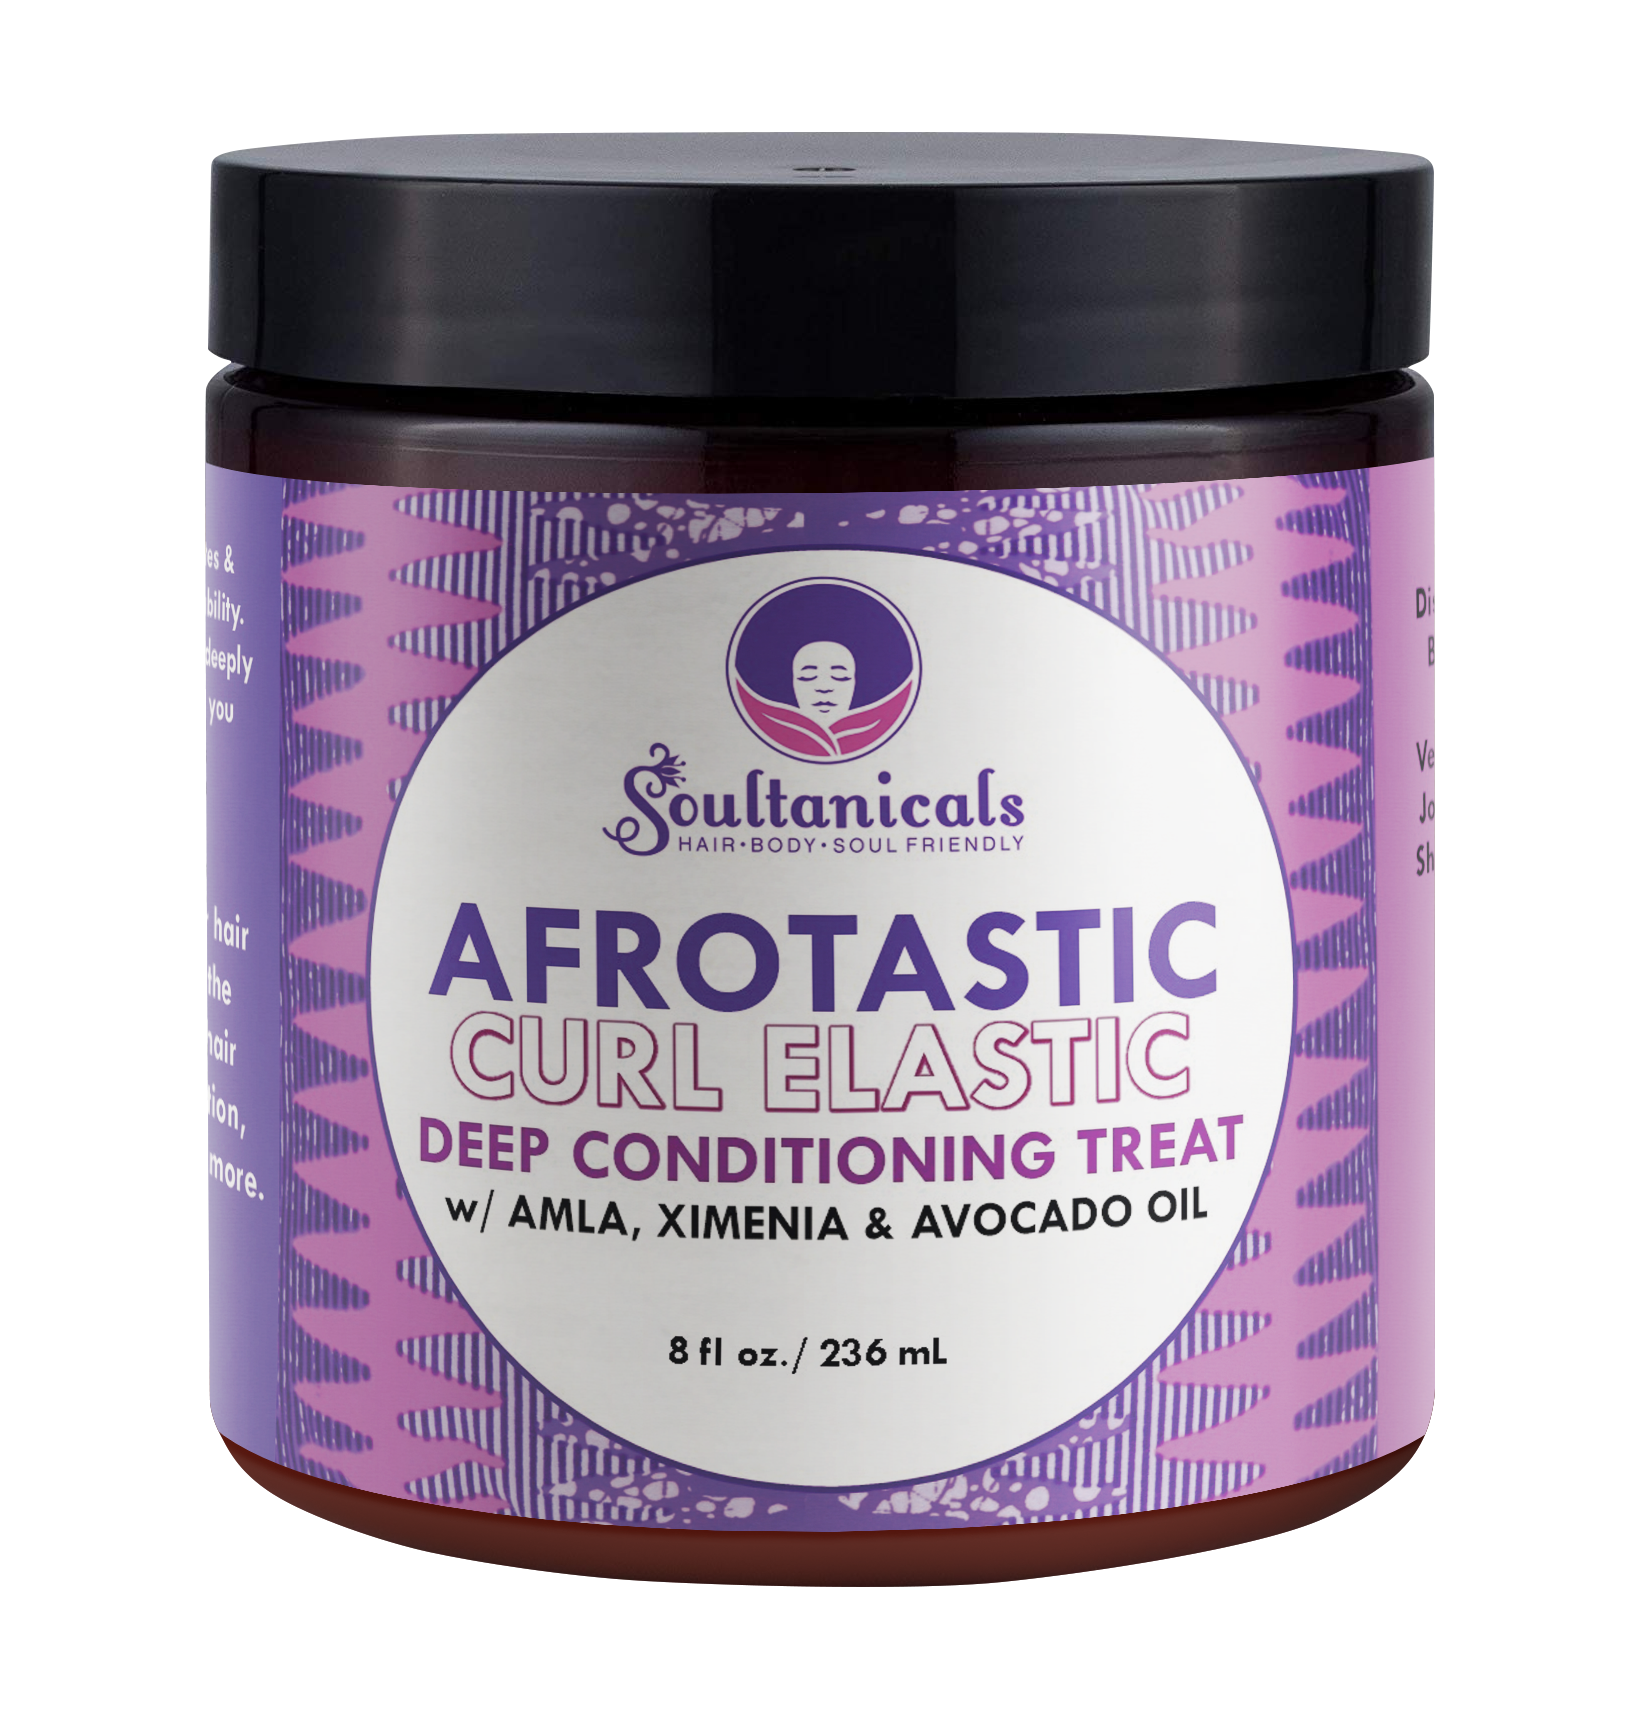 Soultanicals Afrotastic Curl Elastic Deep Conditioning Treatment - Beauty Bar & Supply